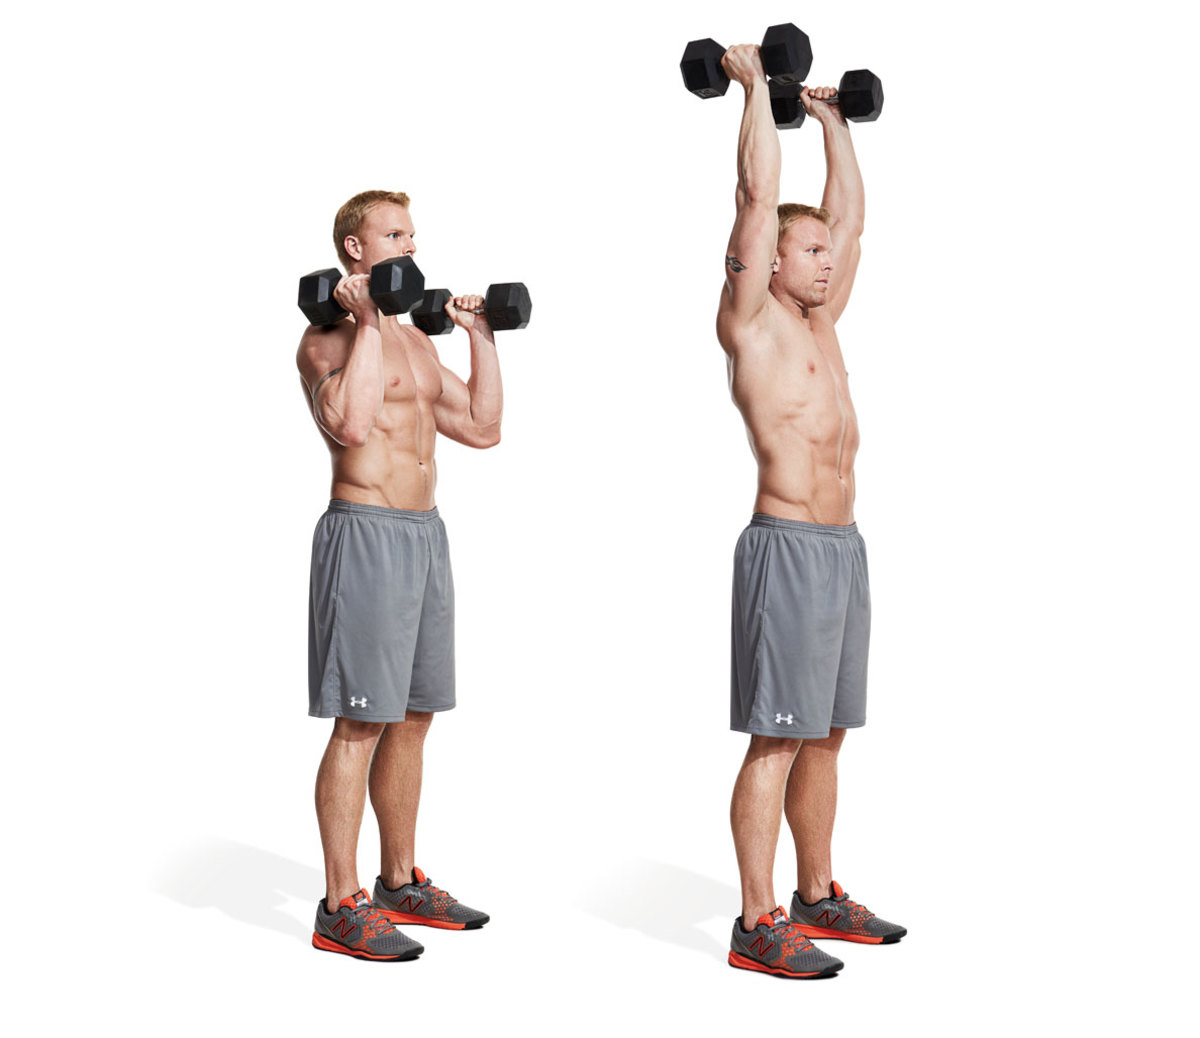 50 Best Shoulder Exercises To Target Full Range of Motion - Men's